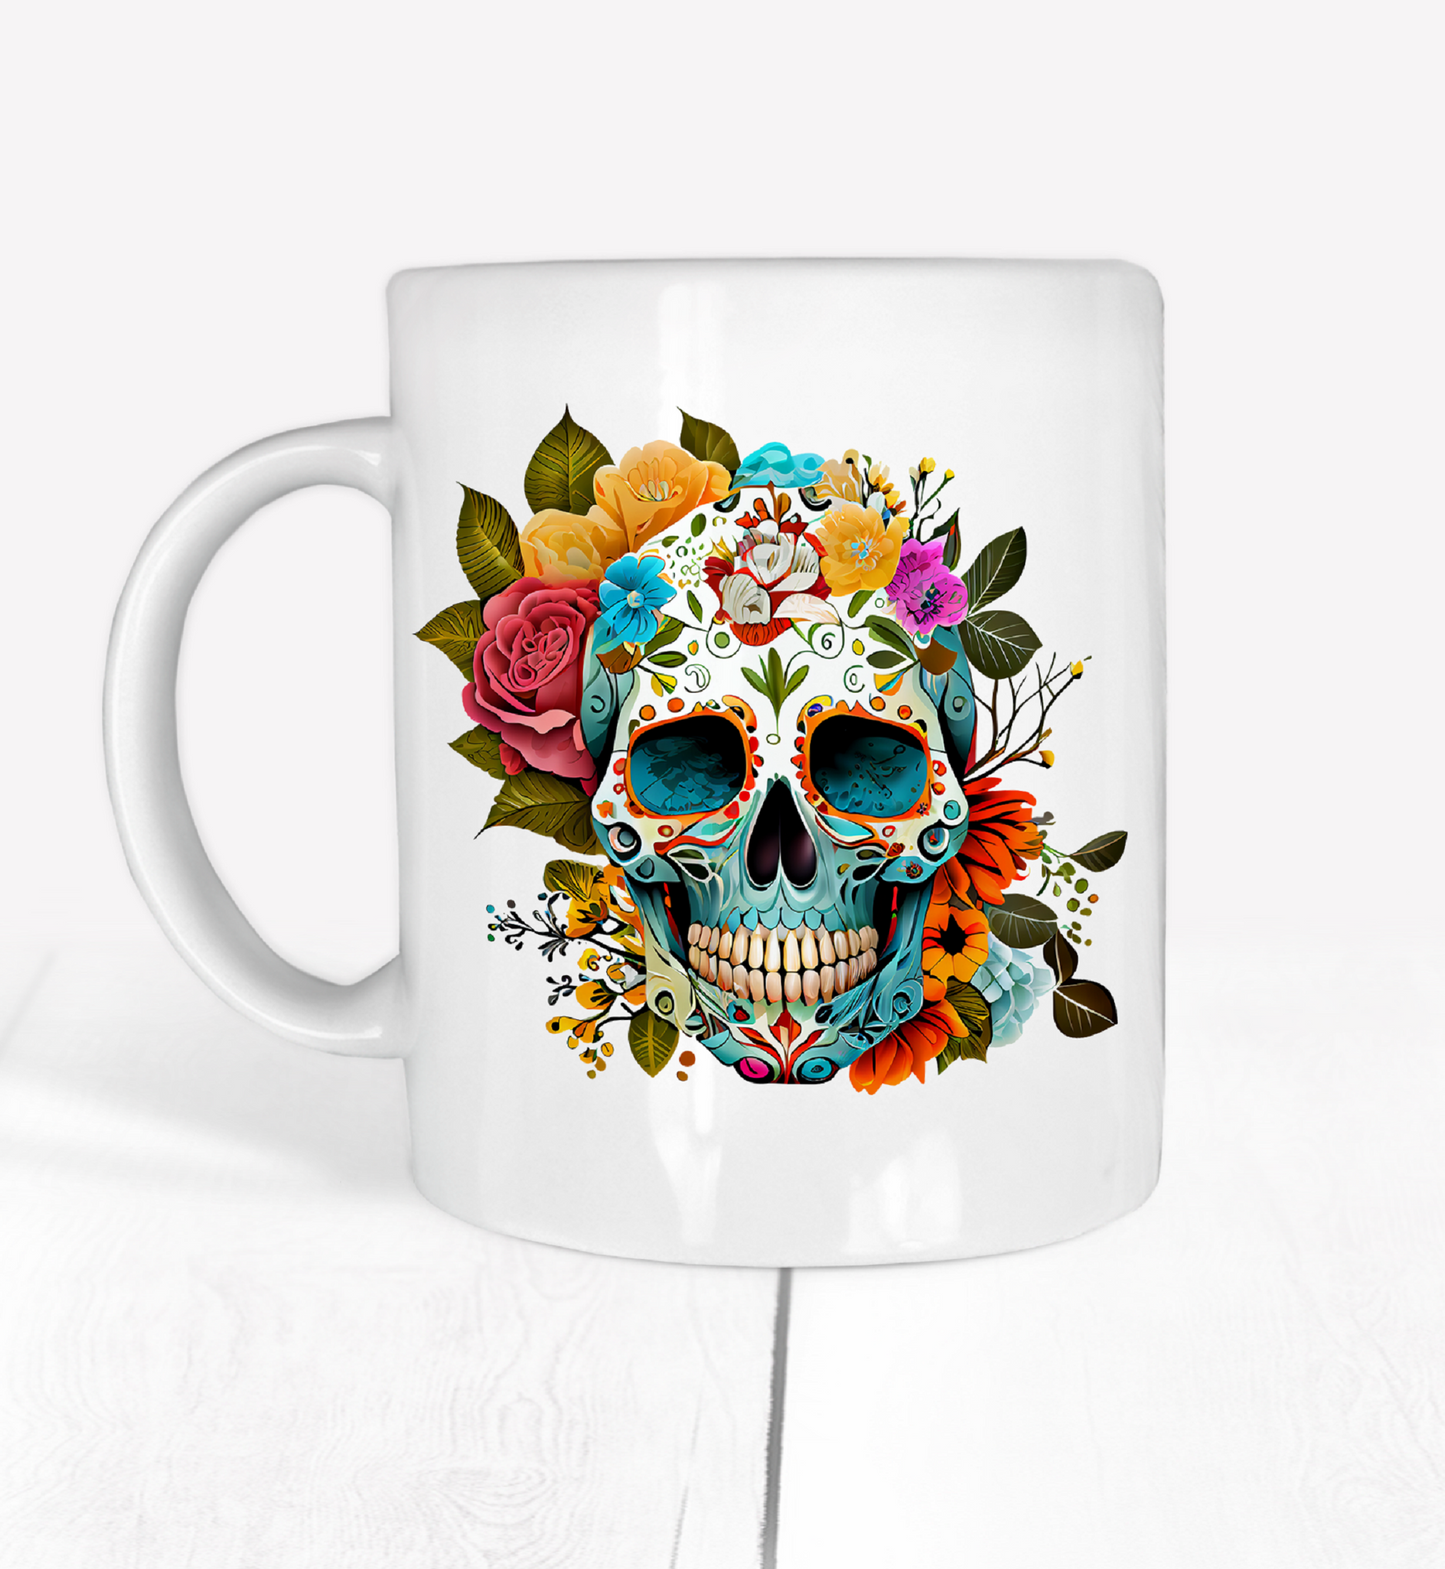  Colourful Sugar Skull Mug by Free Spirit Accessories sold by Free Spirit Accessories